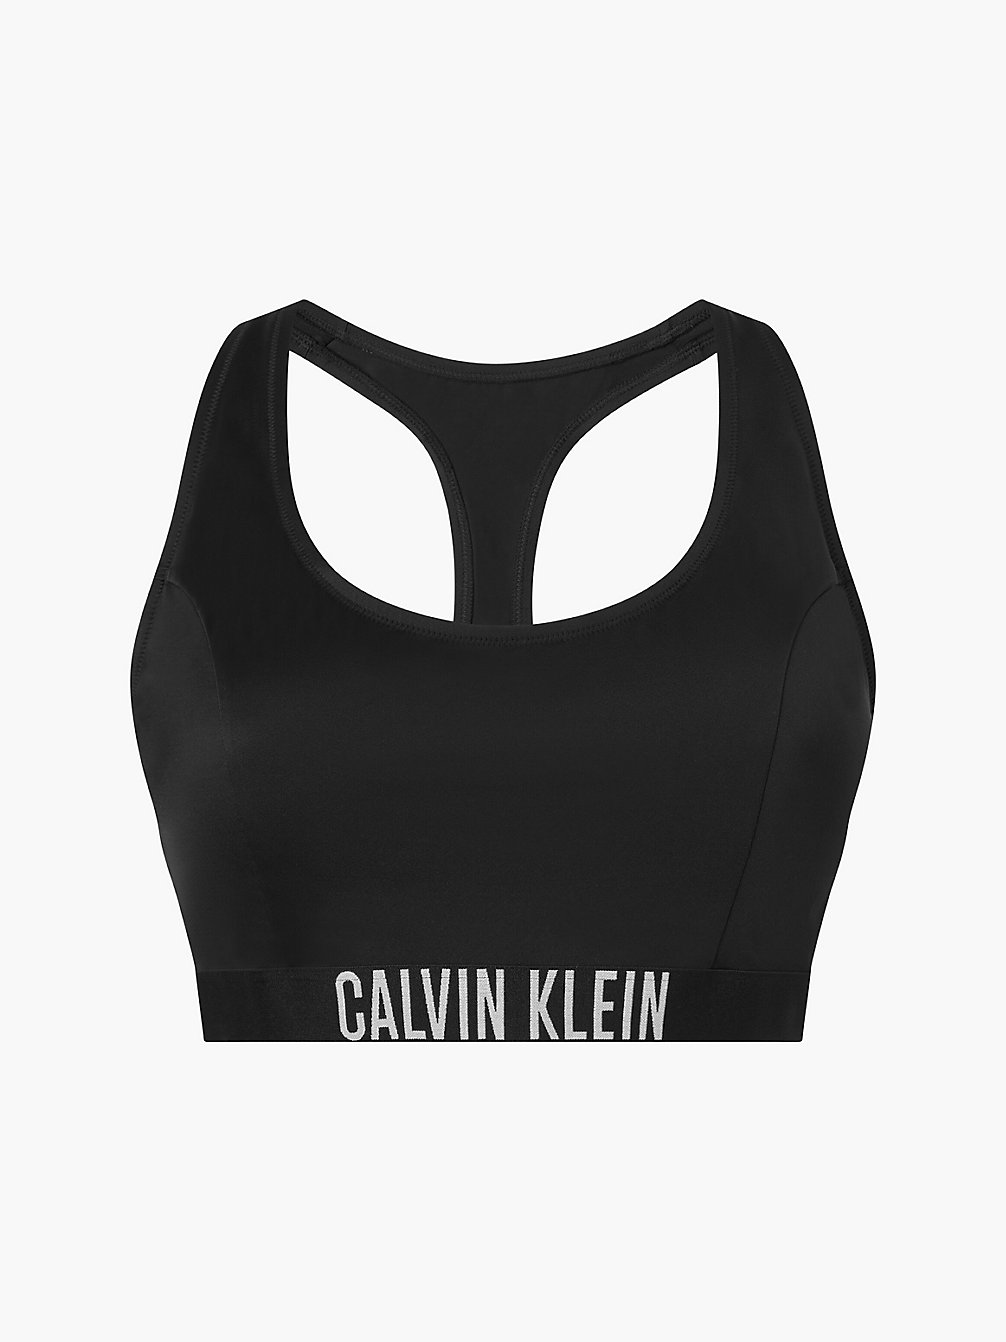 PVH BLACK > Góra Od Bikini Typu Bralette Plus Size - Intense Power > undefined Kobiety - Calvin Klein